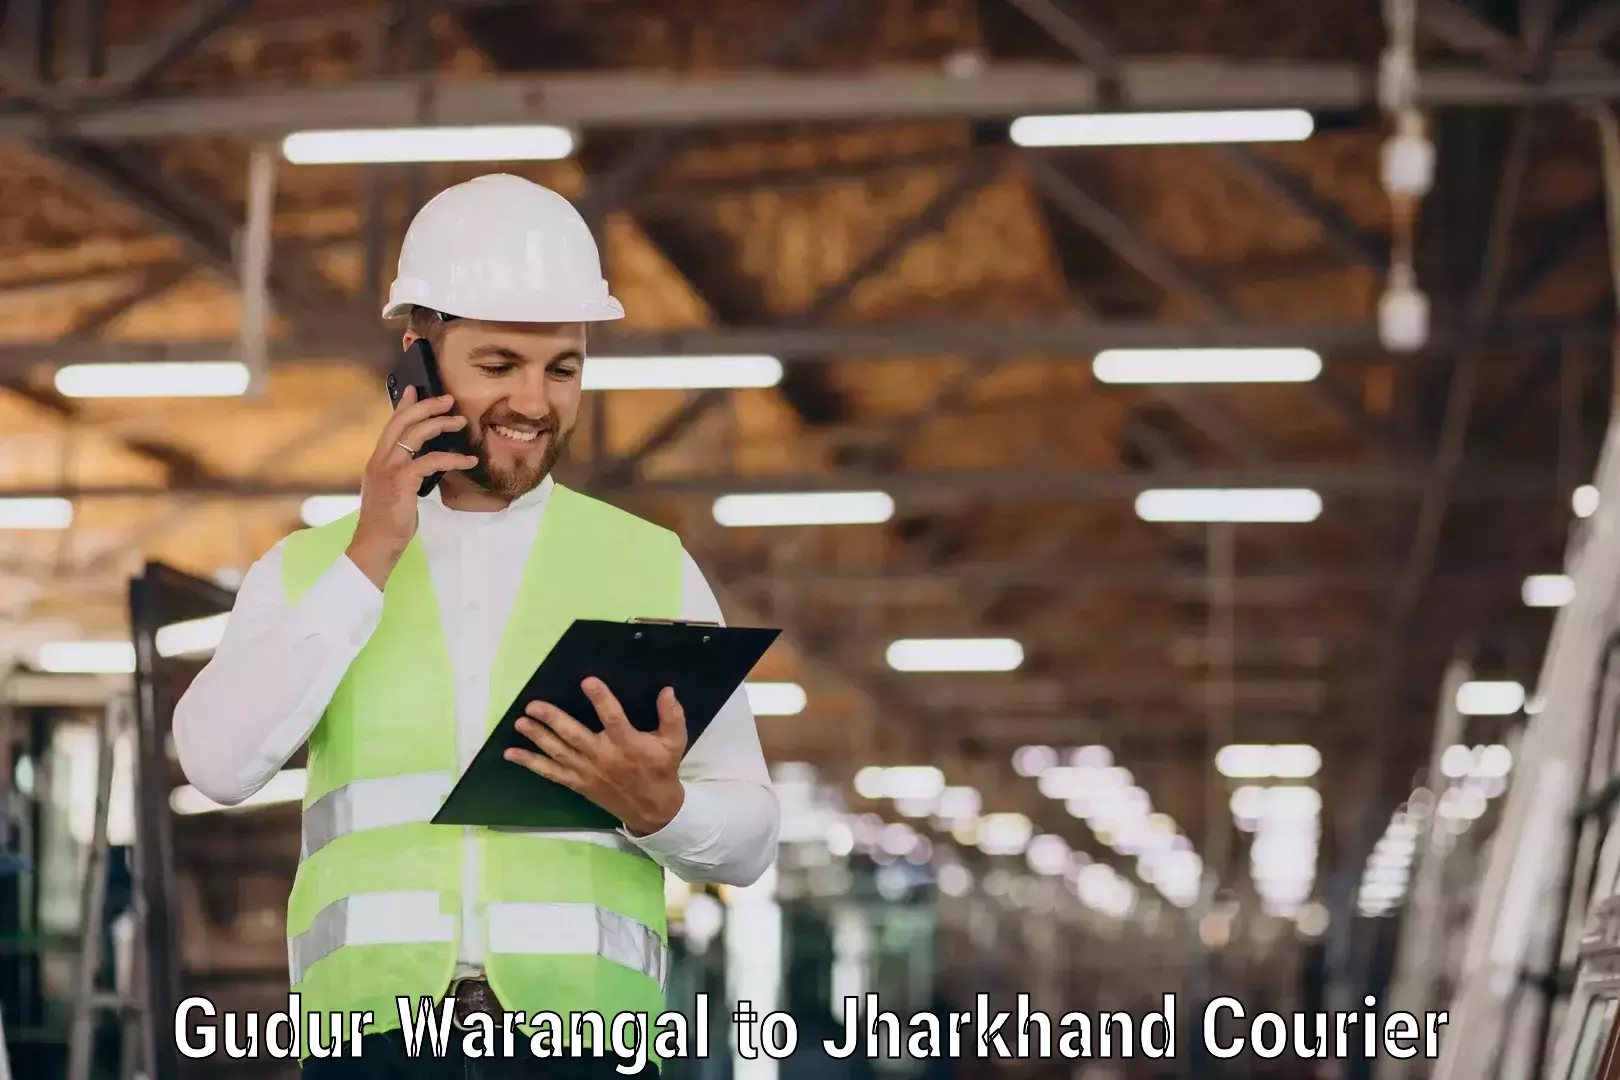 Courier service partnerships Gudur Warangal to Chouparan